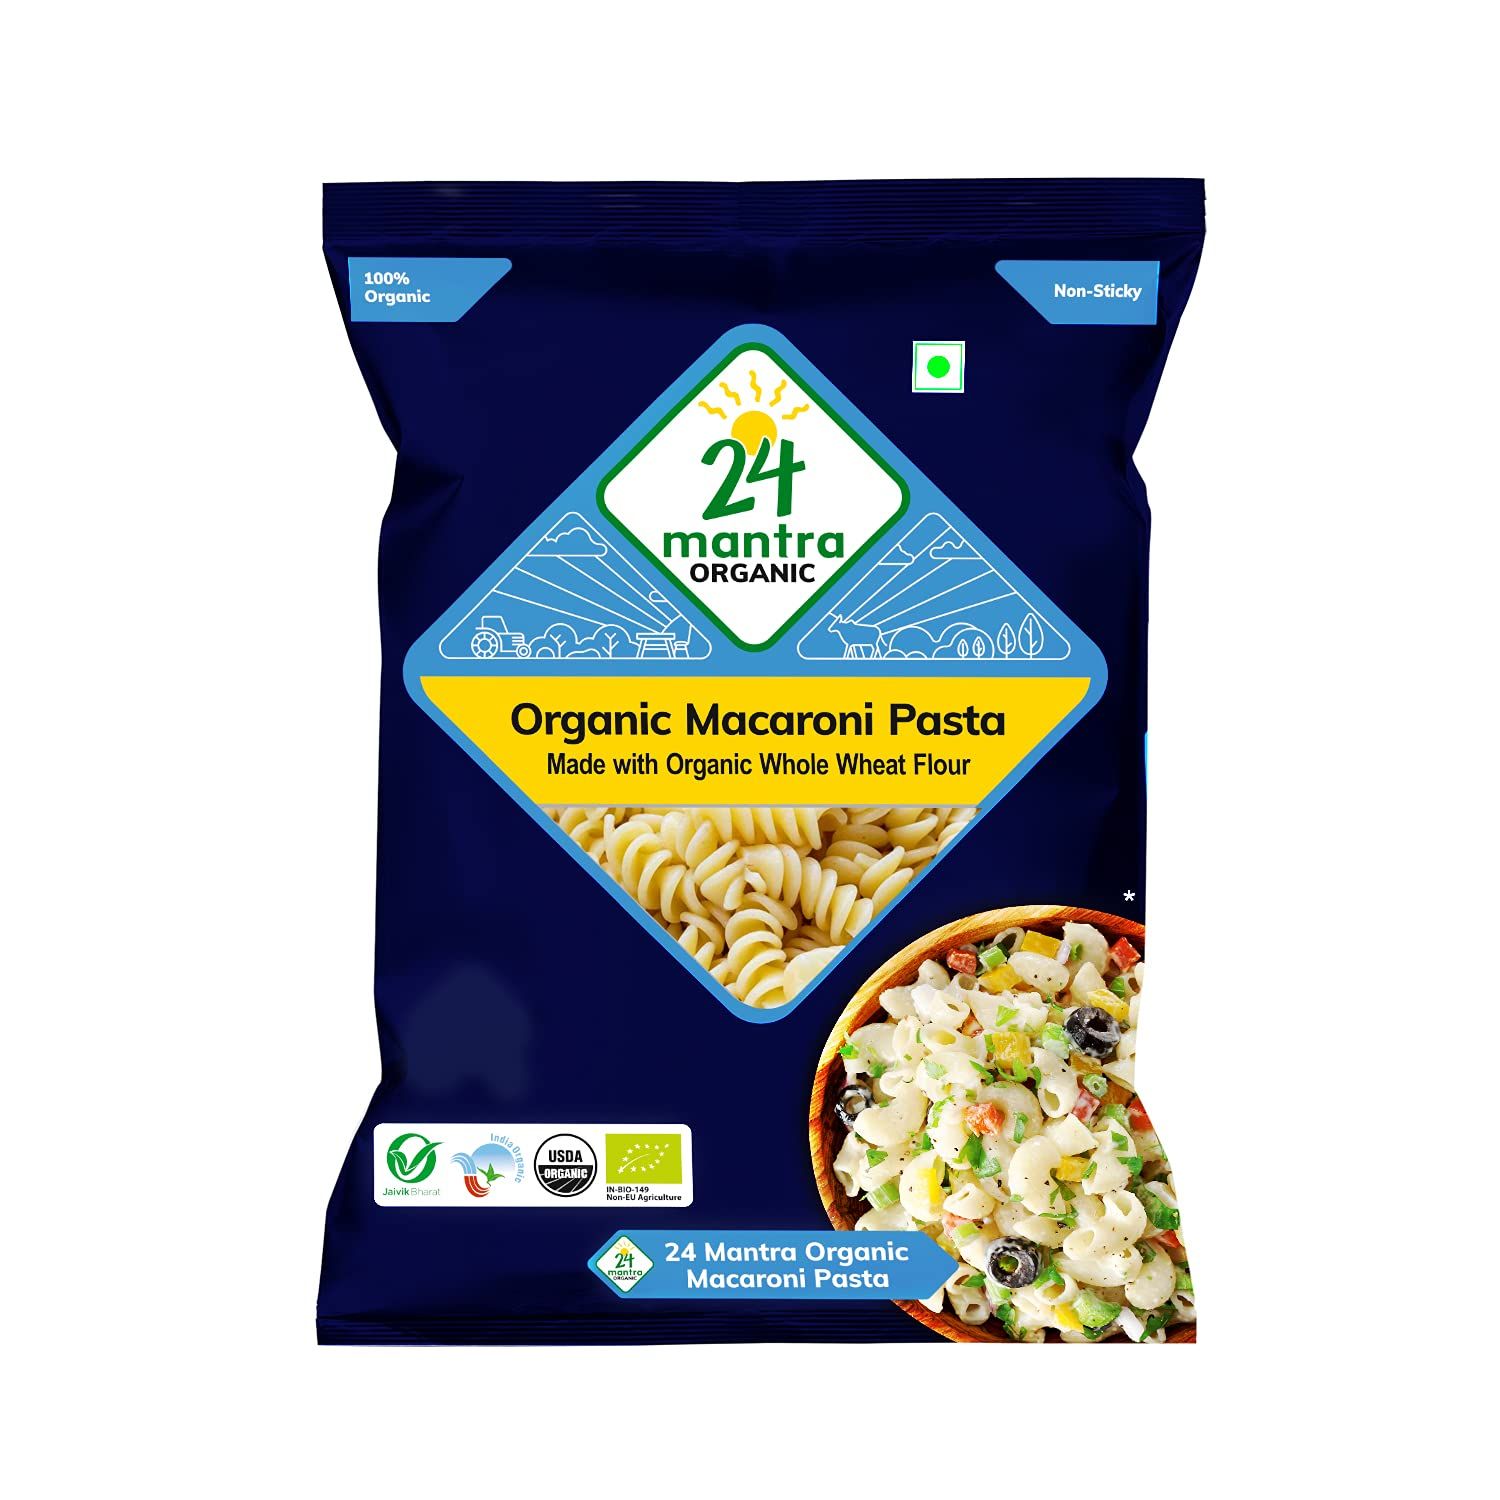 24 Mantra Organic Wholewheat Macaroni Pasta Image